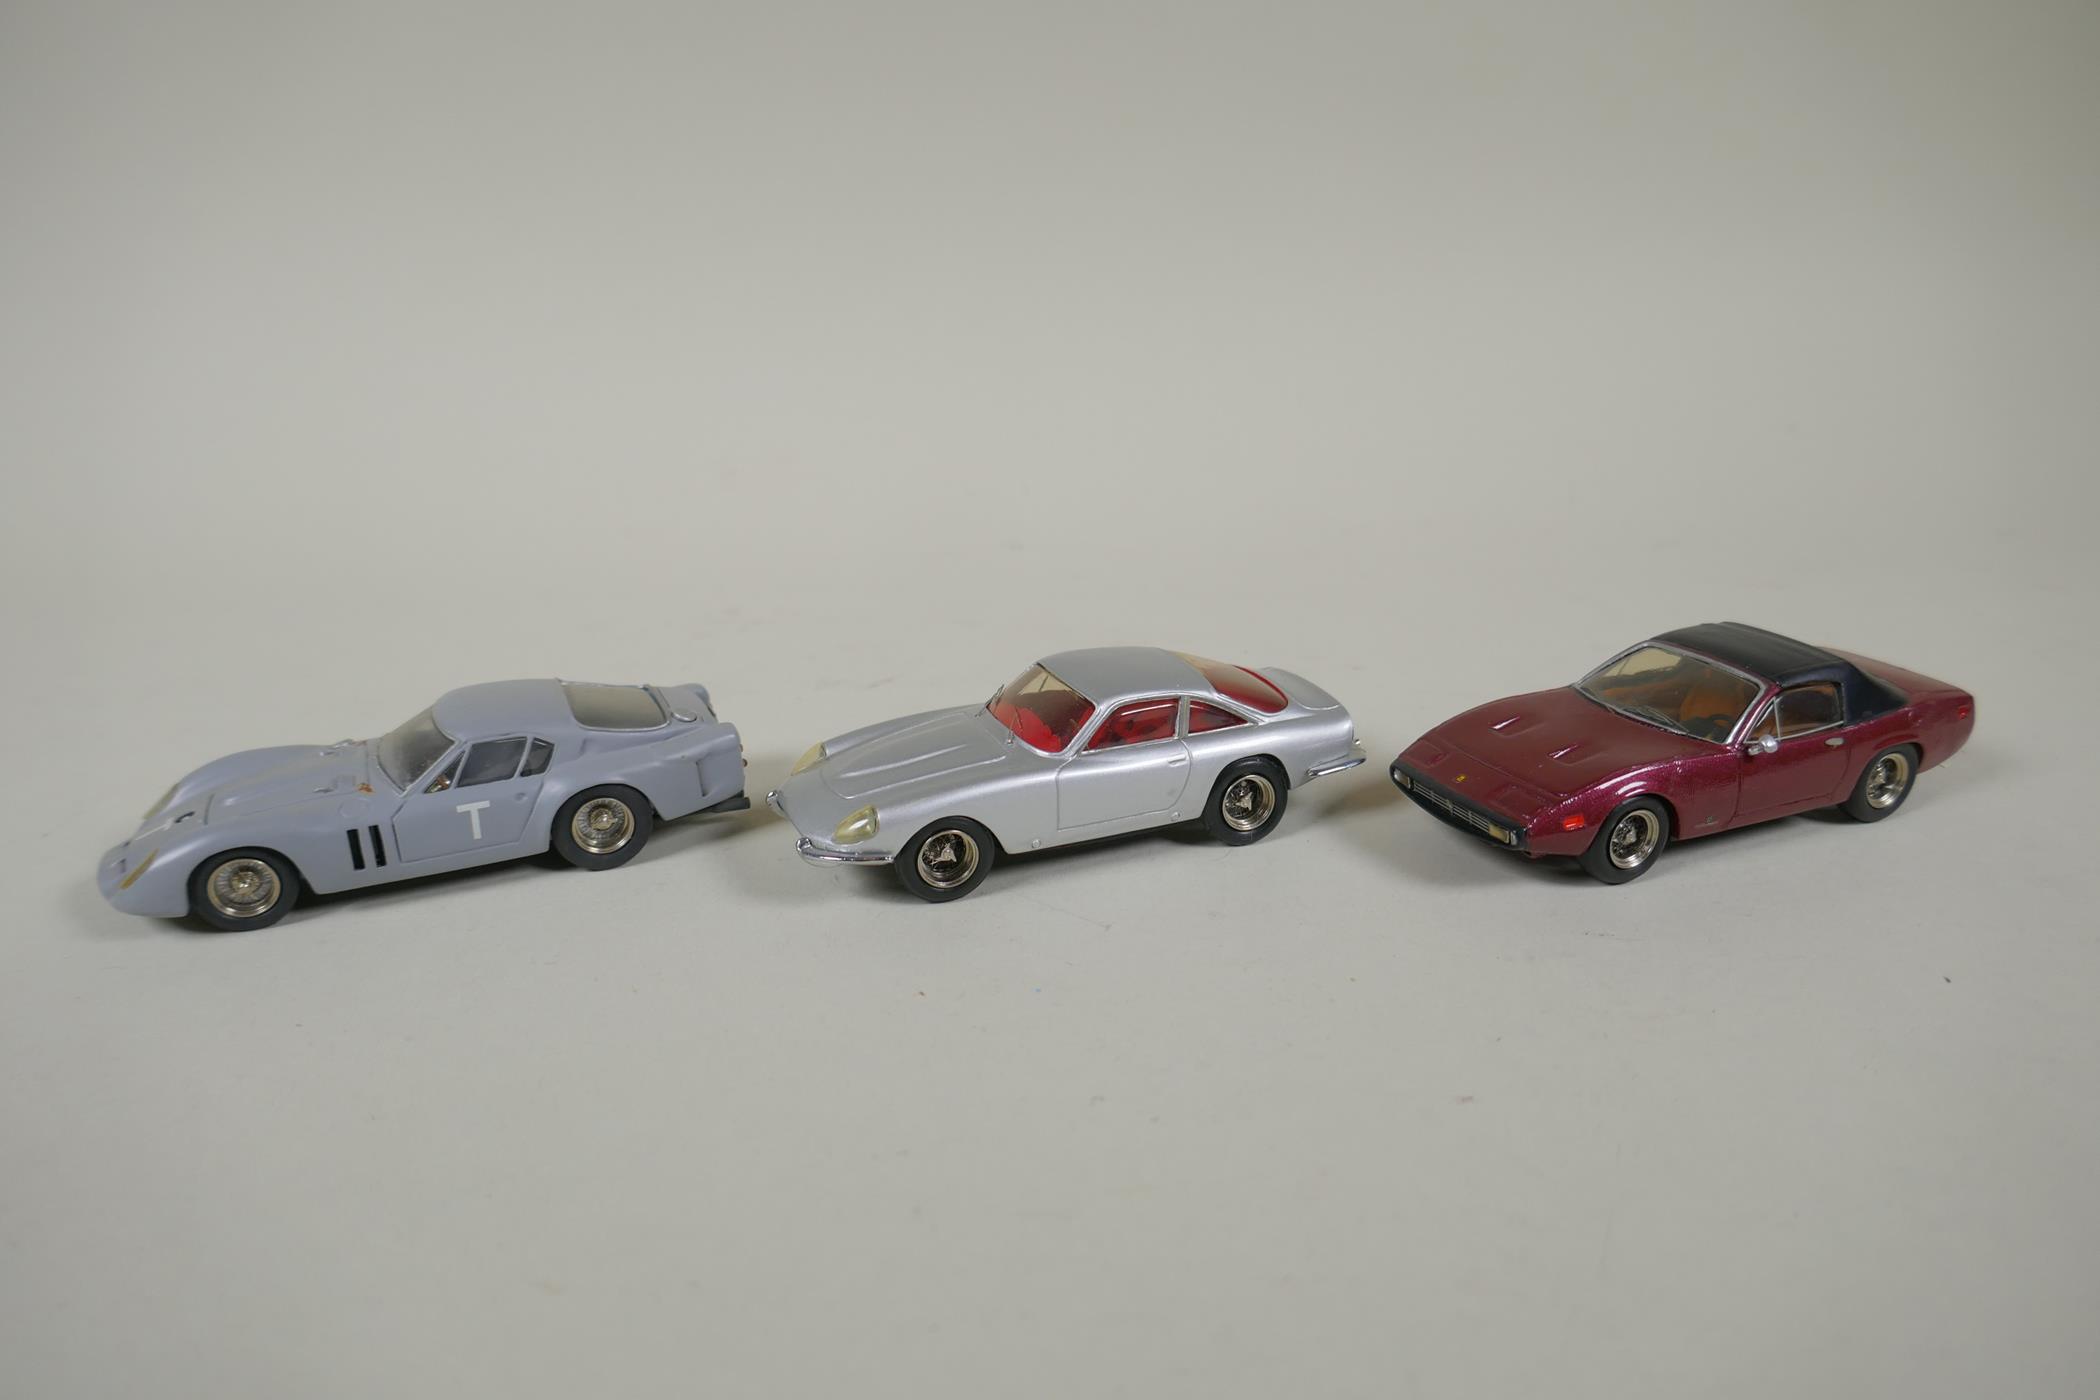 Fifteen 1:43 scale kit built Ferrari model cars by Gamma Models, Nestor, Auto Creation, Record, MOG, - Image 8 of 8